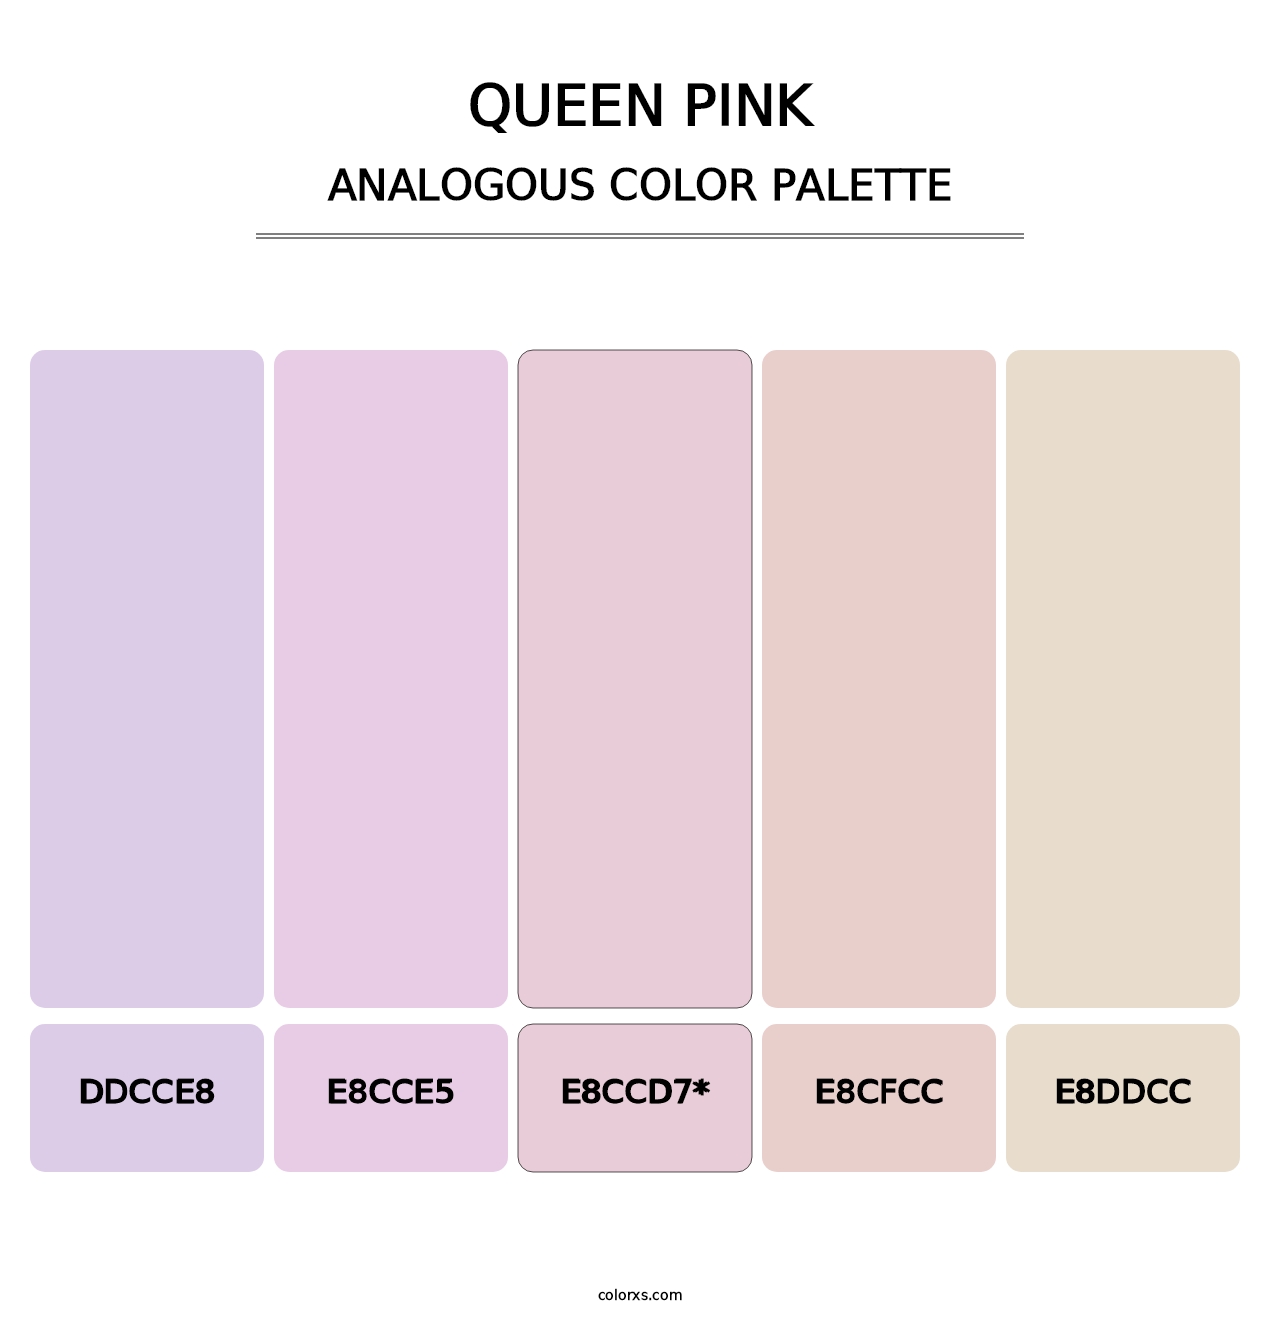 Queen Pink - Analogous Color Palette